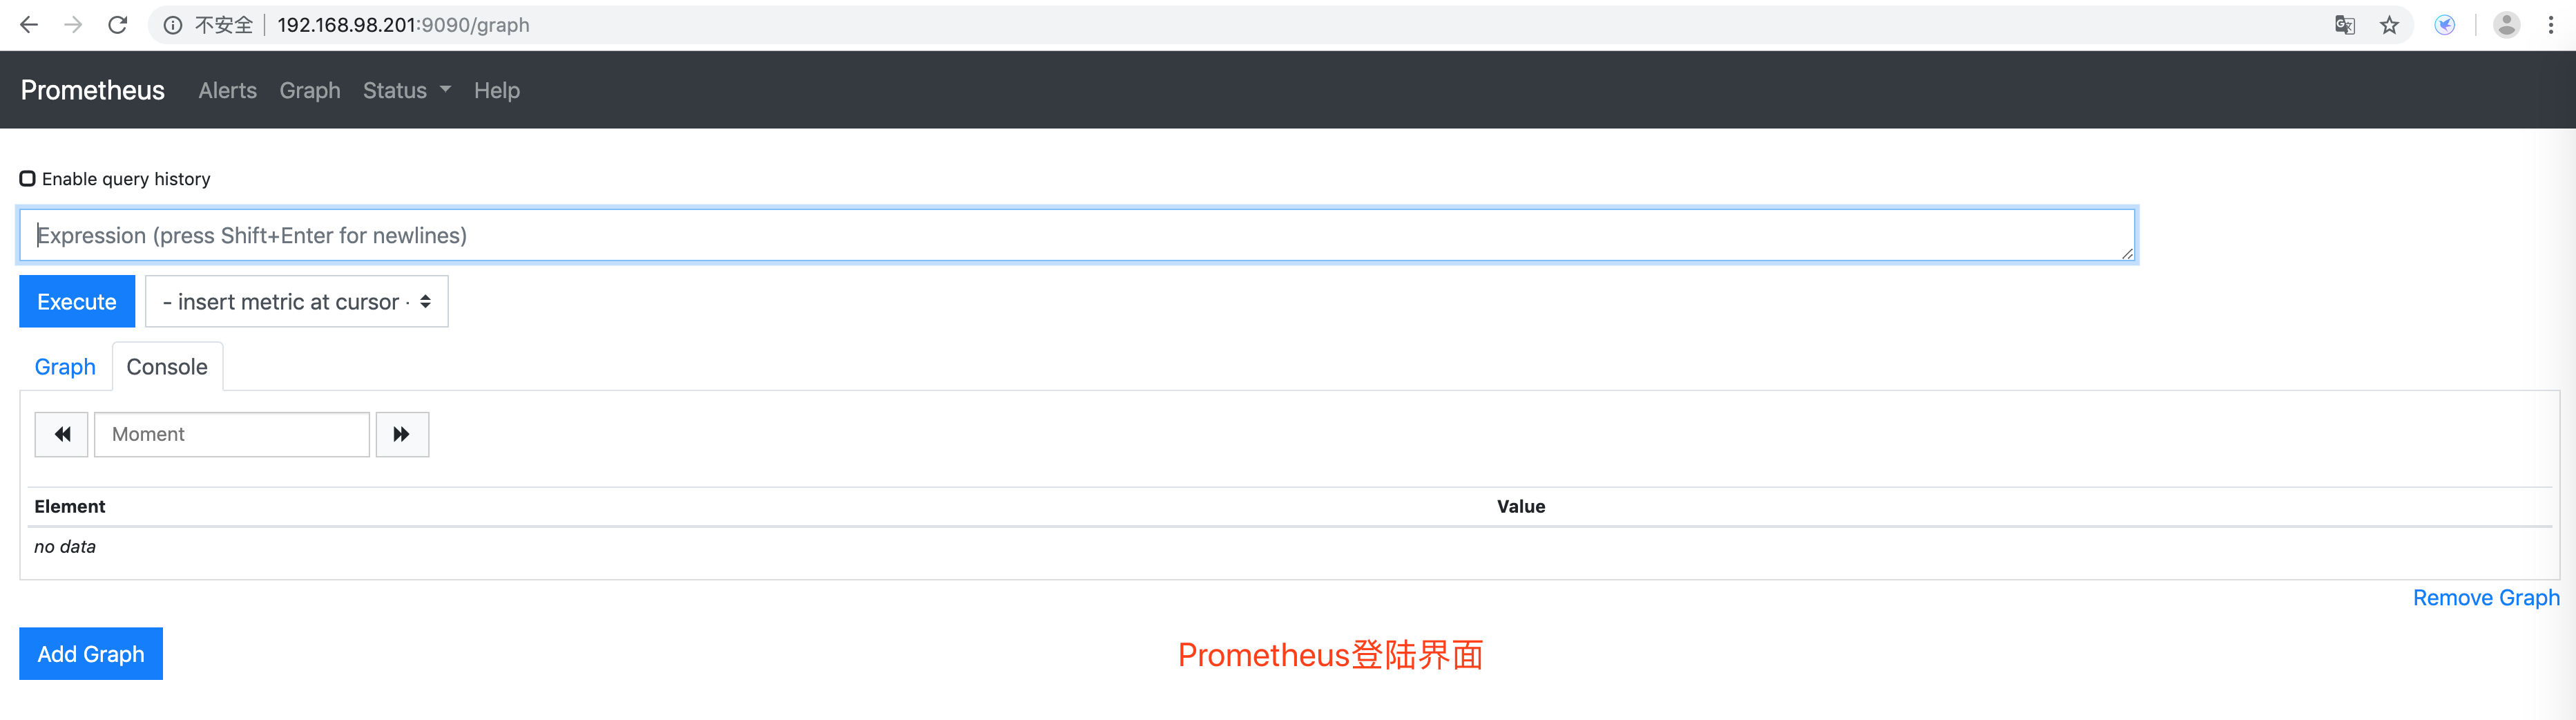 Prometheus_1.png